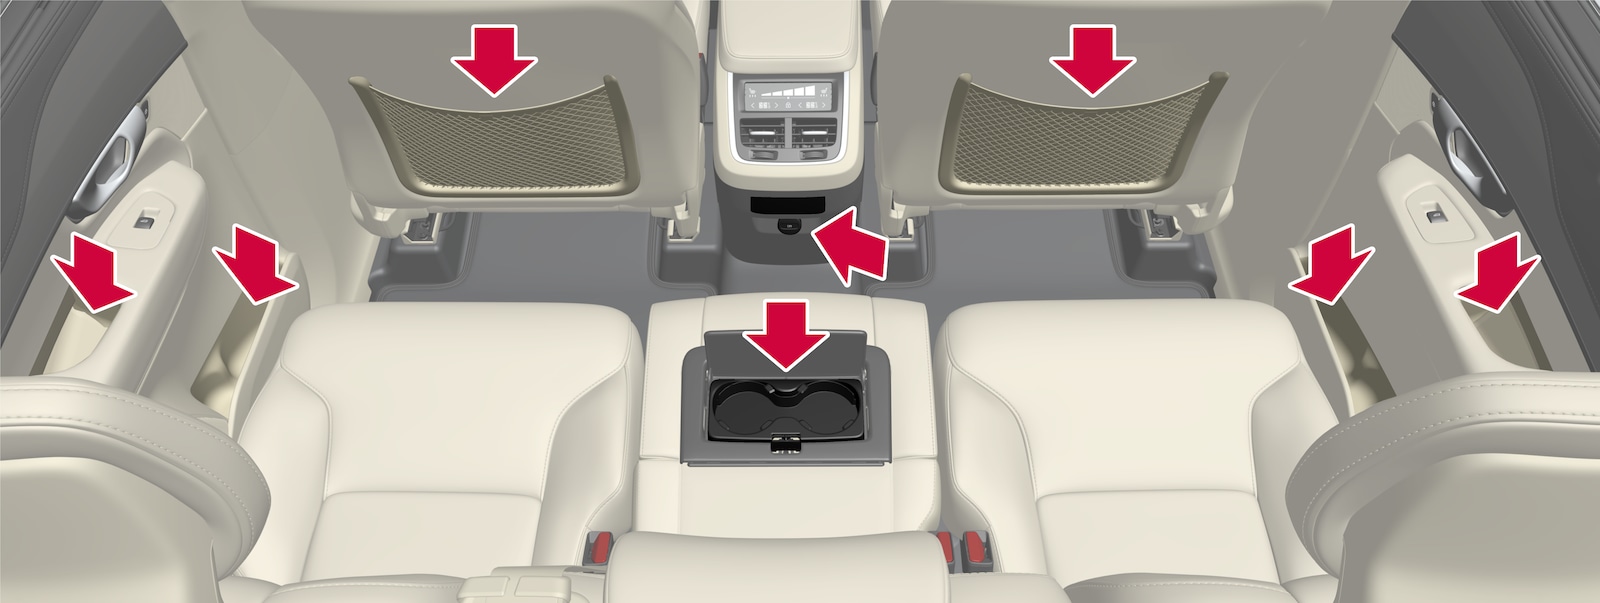 P5-2222-XC90+XC90H-Overview interior second seat row-7 seats